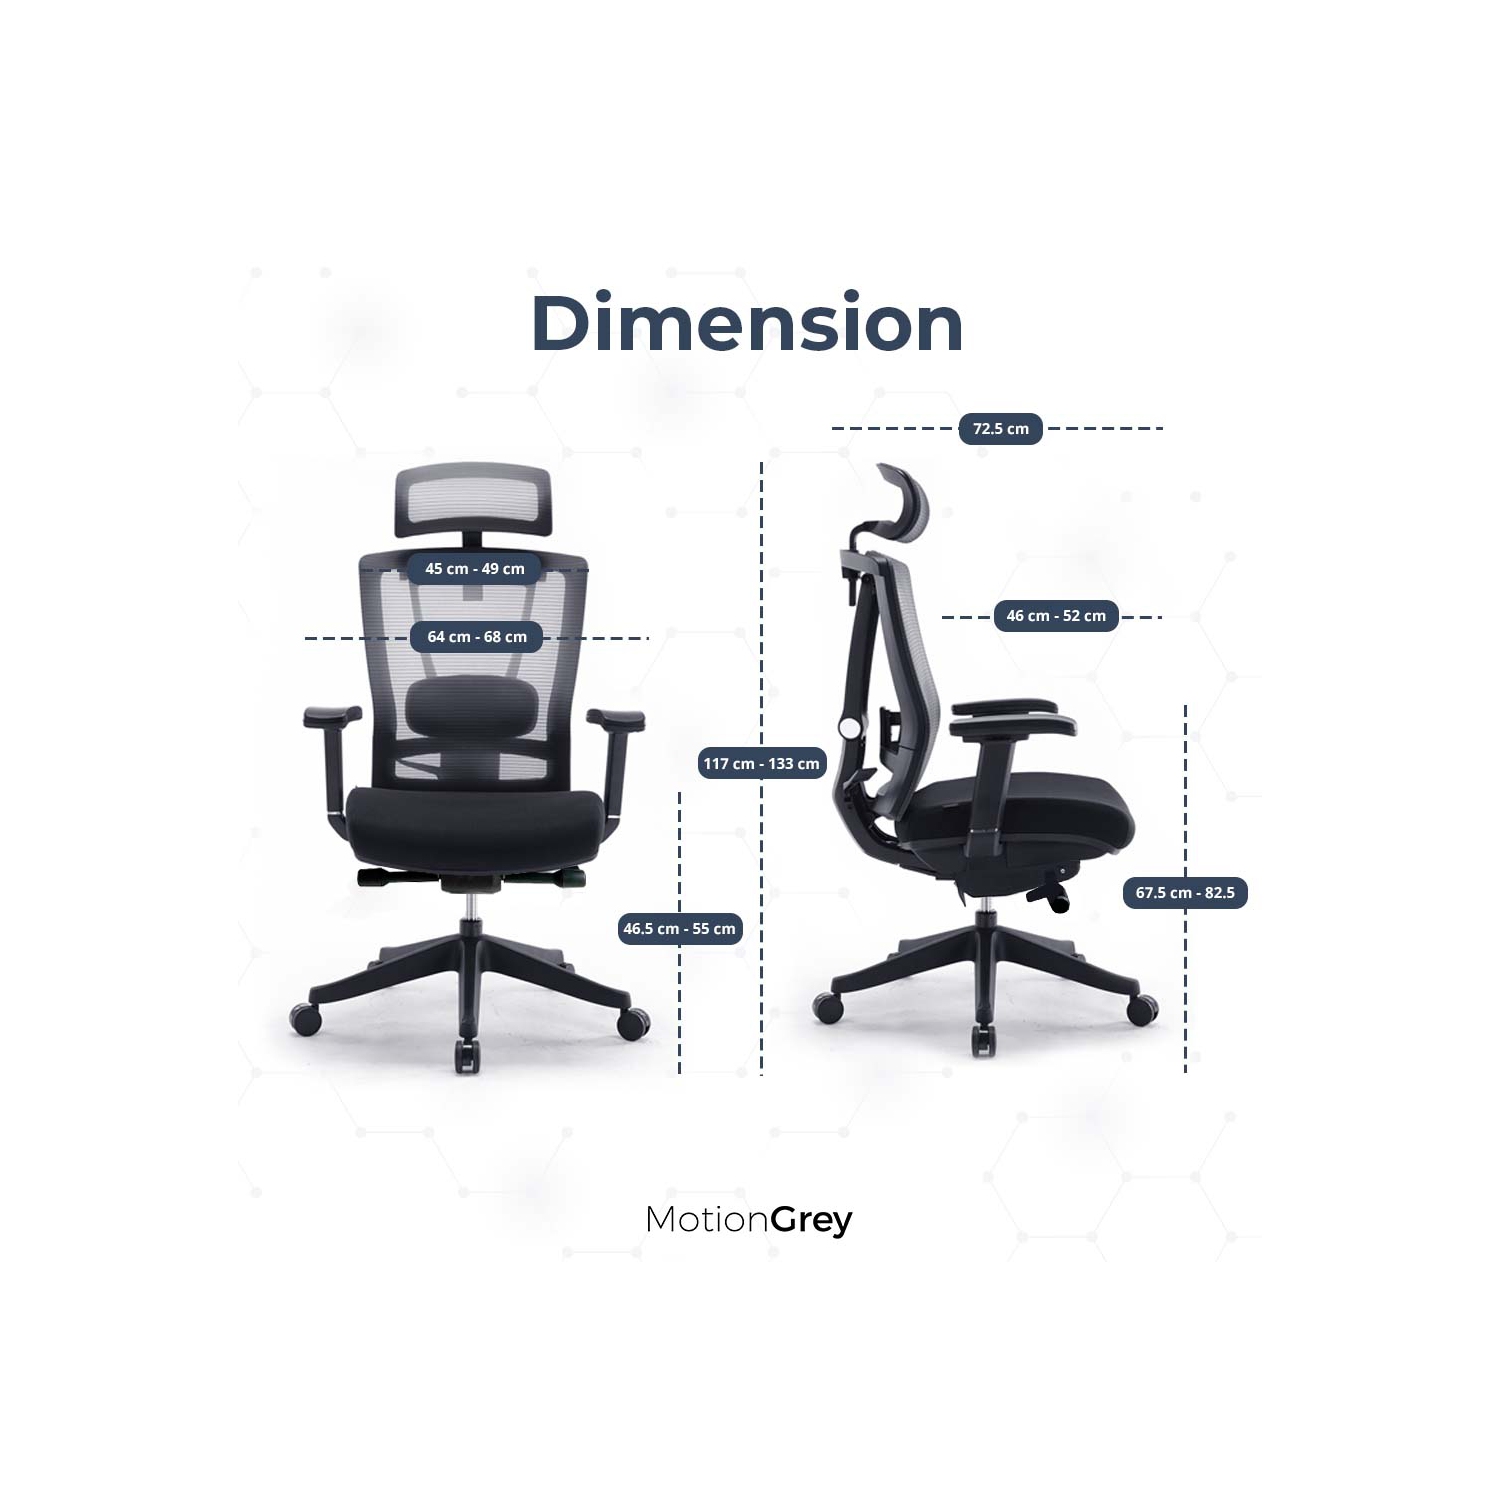 MotionGrey Cloud Mesh Series Executive Ergonomic Computer Desk Home Office  Chair with 4D Armrest & Lumbar Support - Black